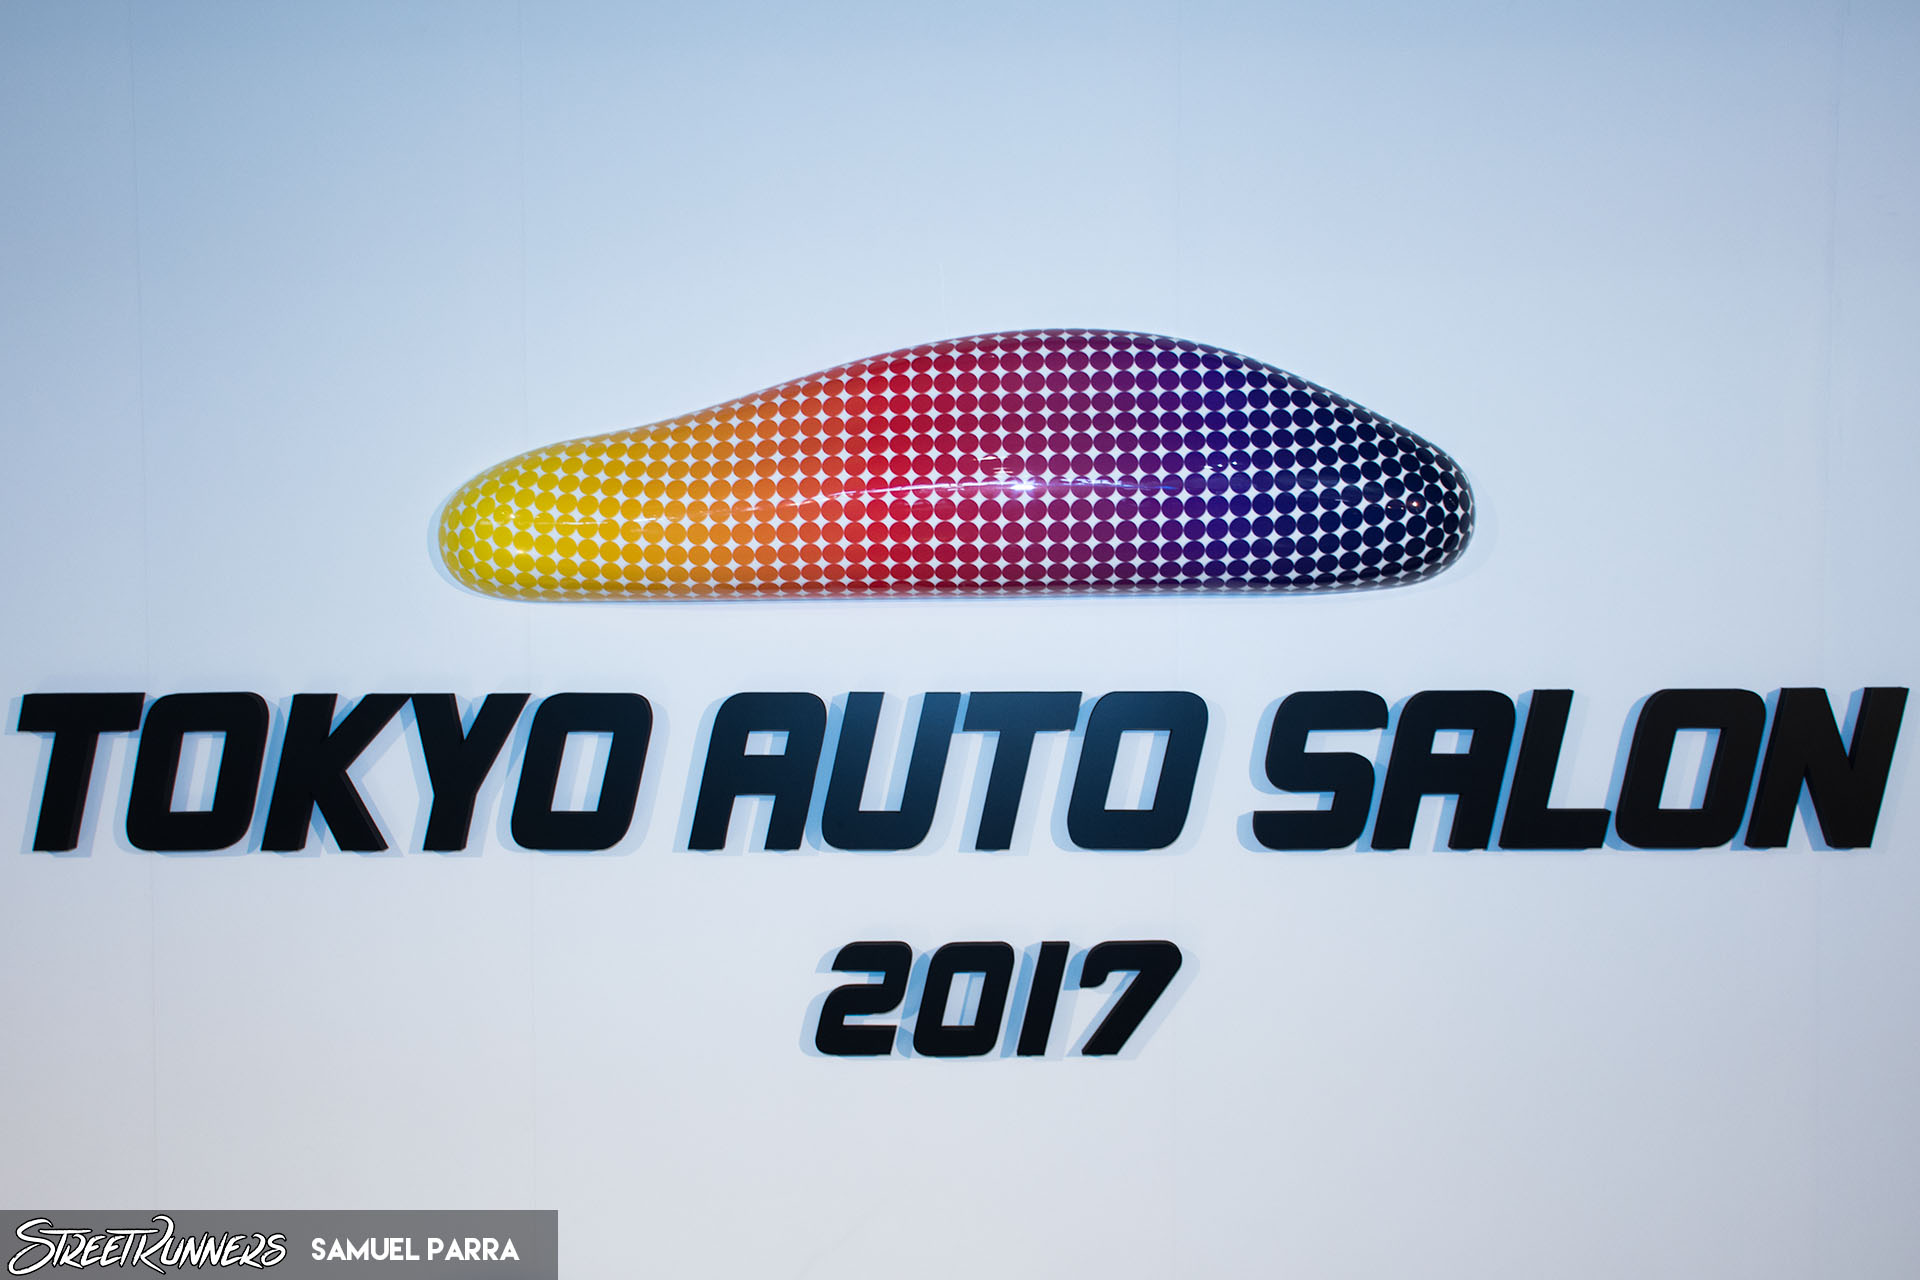 Crónica del Tokyo Auto Salon 2017 - Parte 1